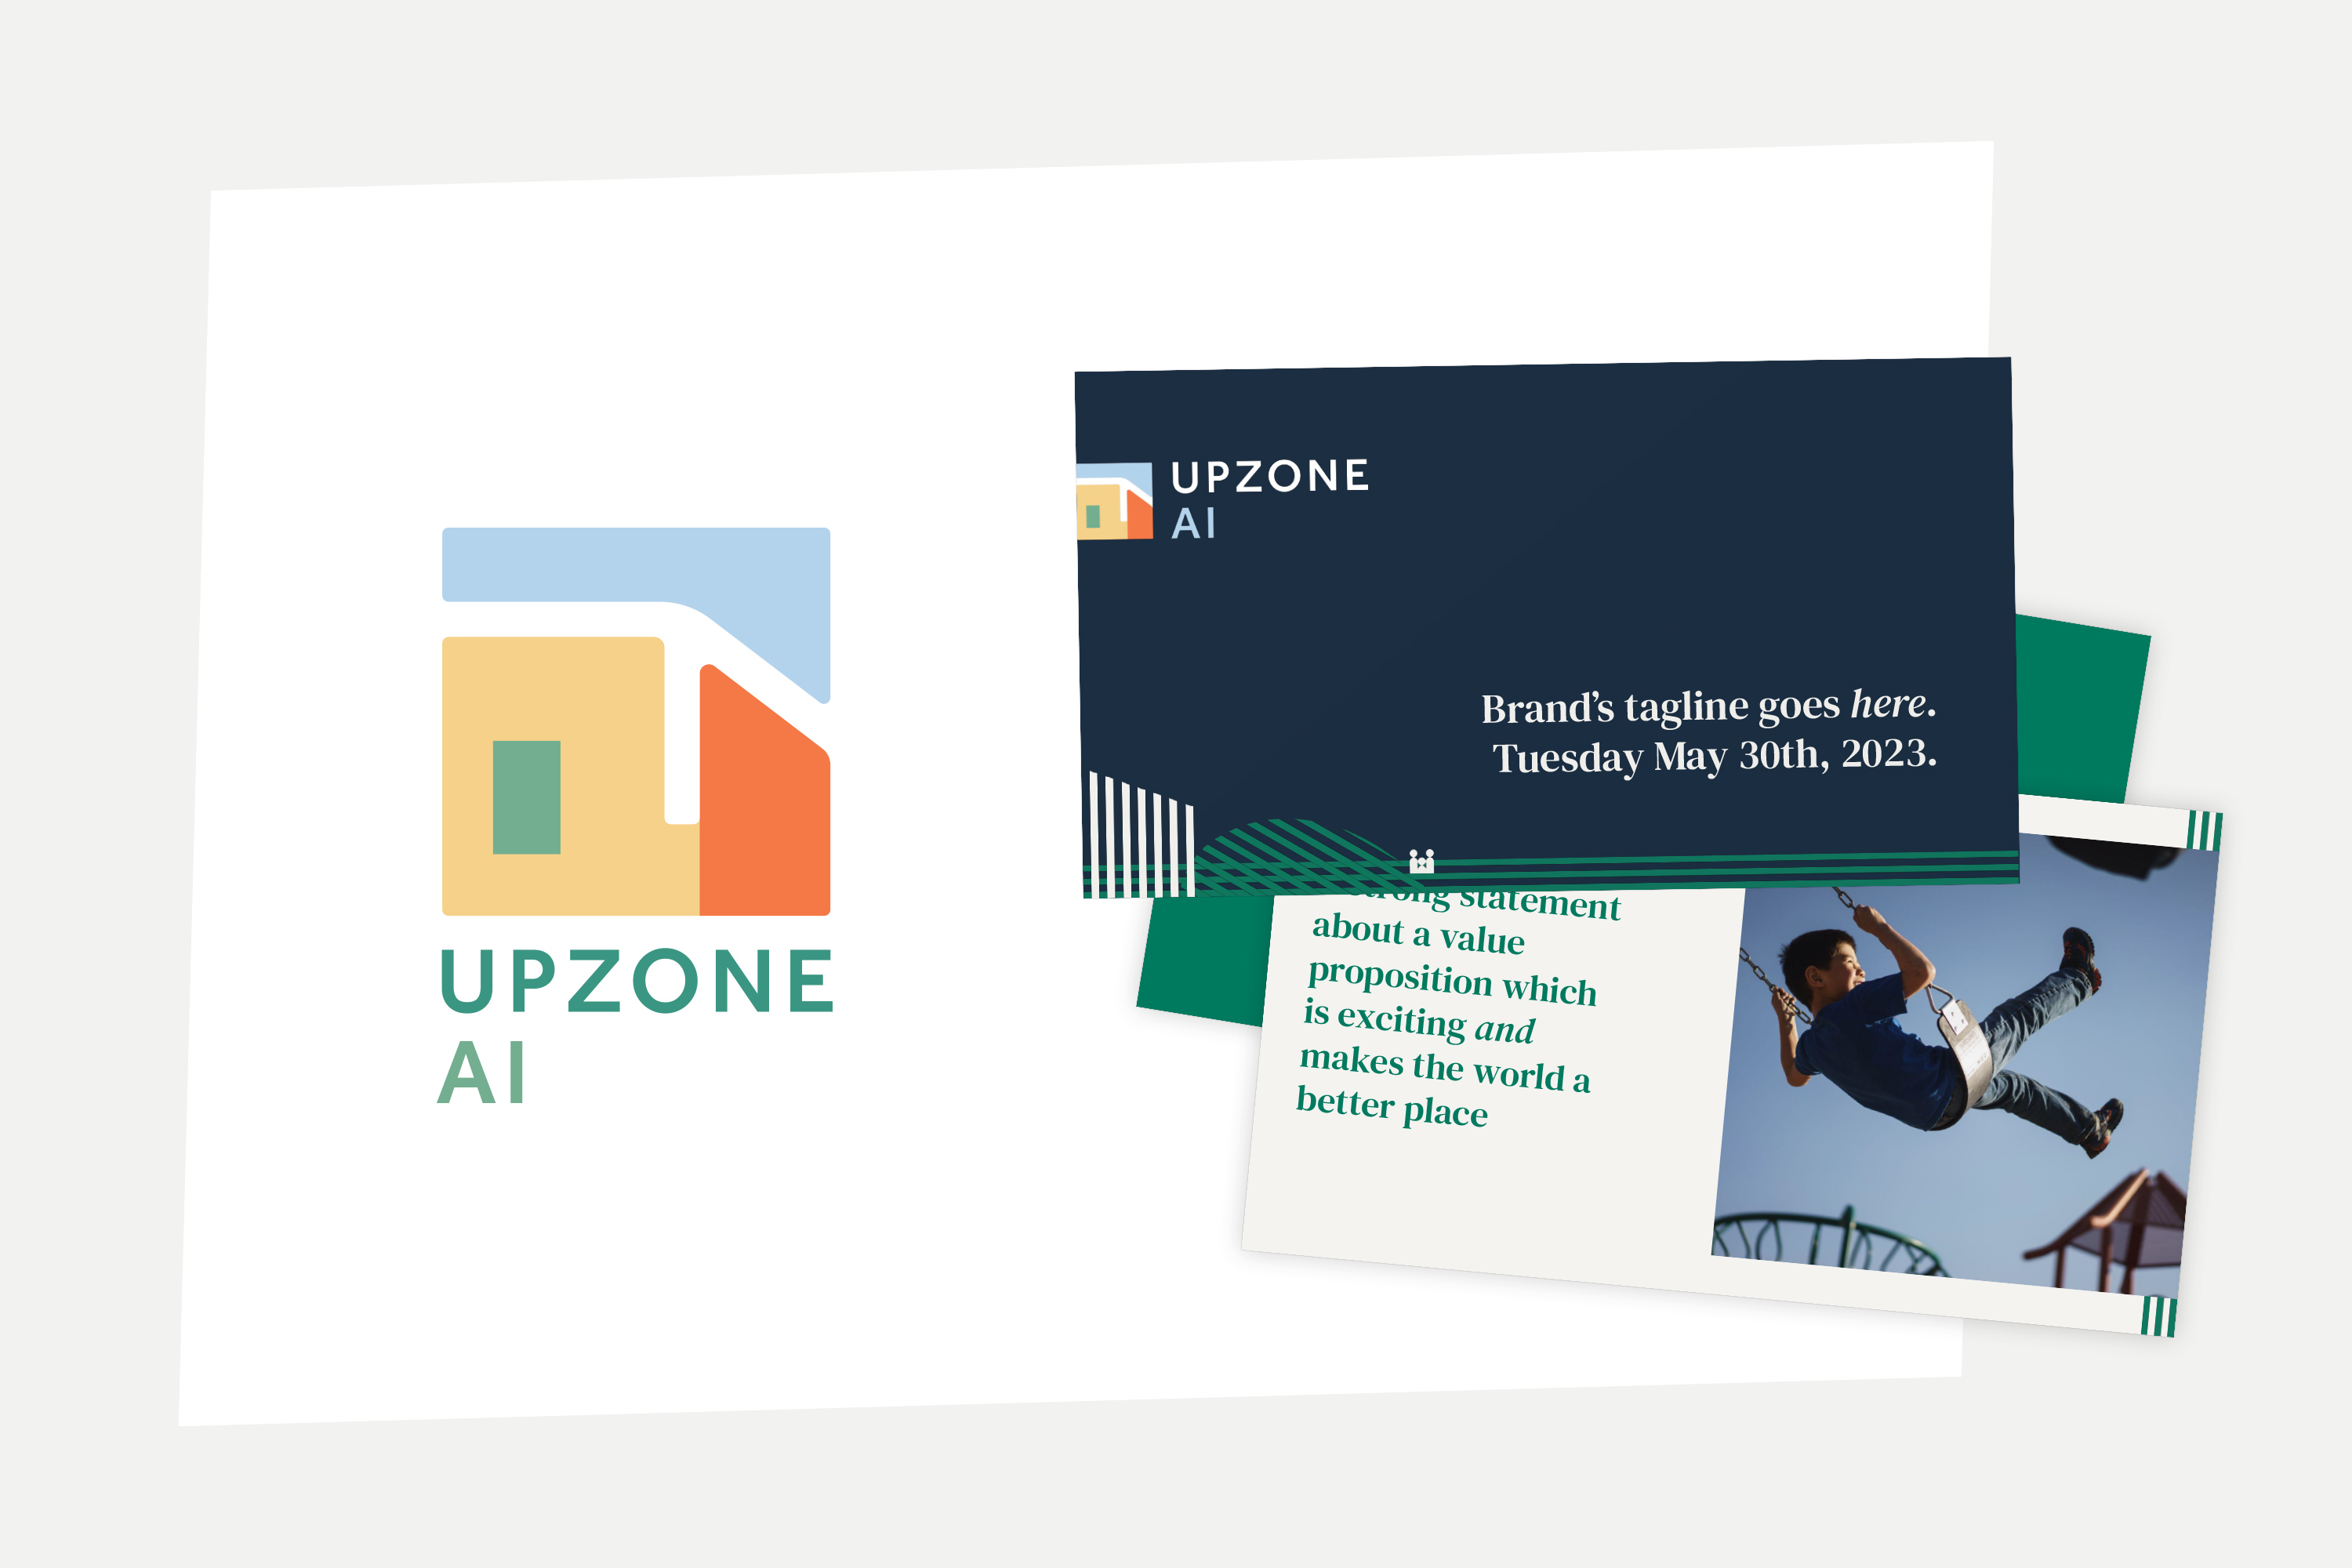 Upzone AI brand design by Theysaurus